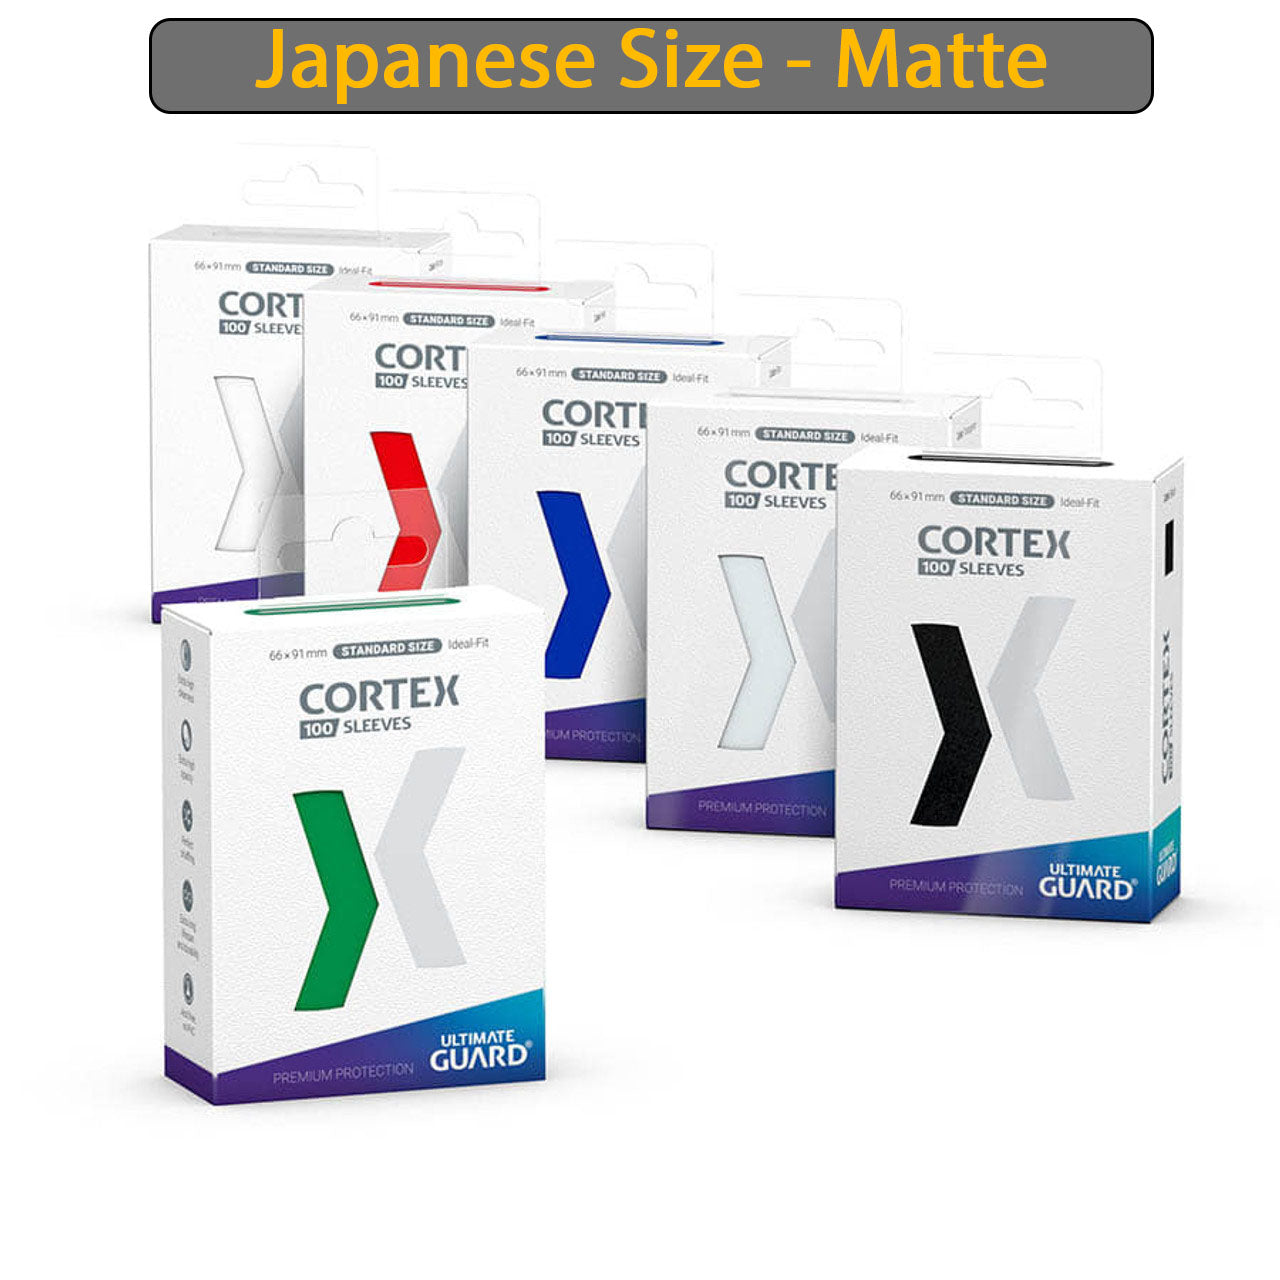 Ultimate Guard Cortex Japanese Size Matte